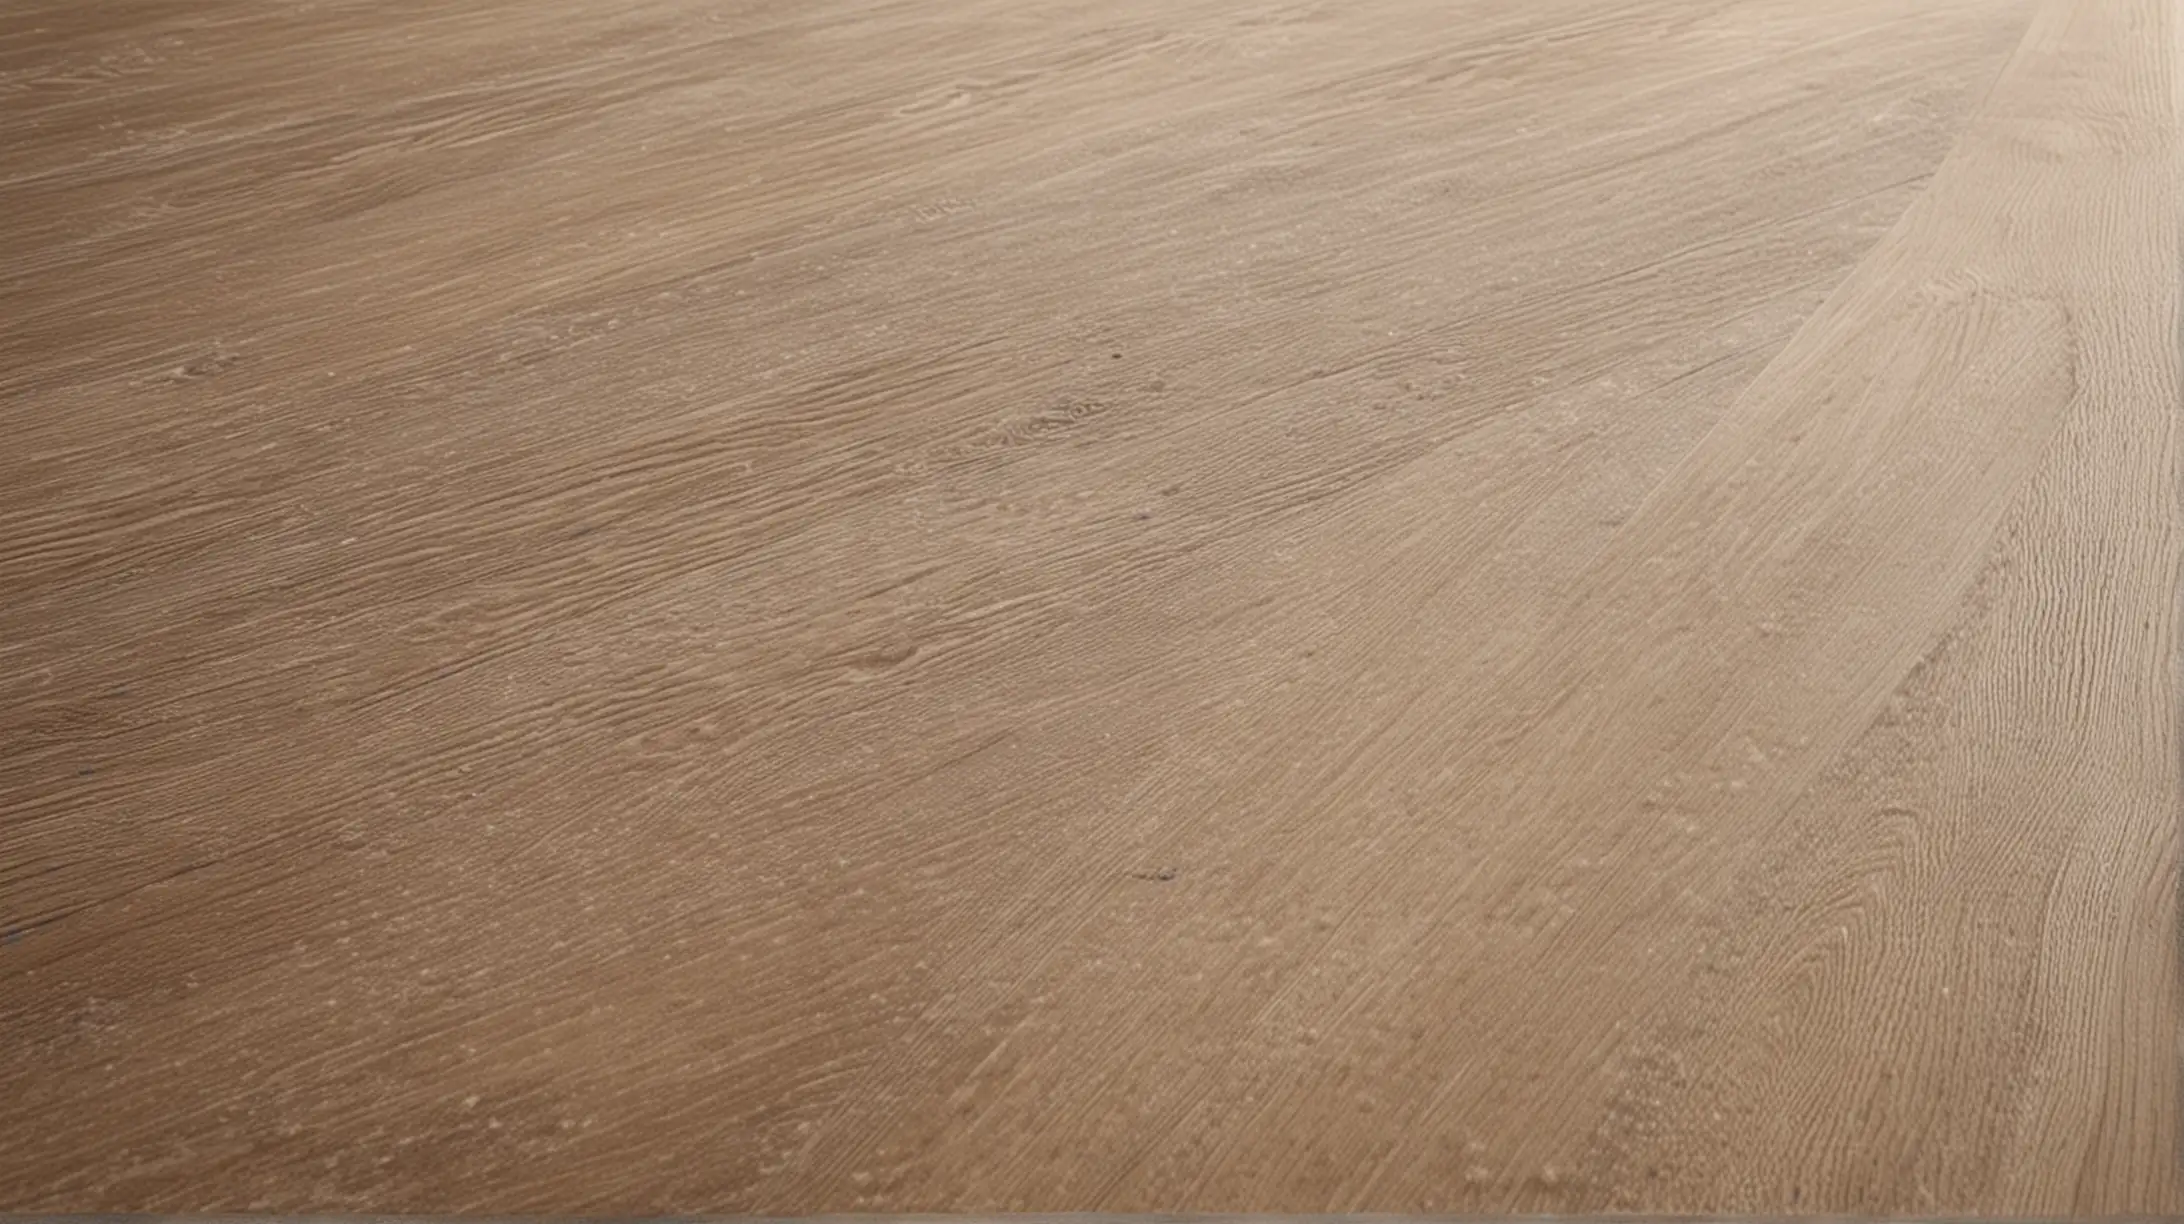 Closeup of Textured Dusty Wood Floor